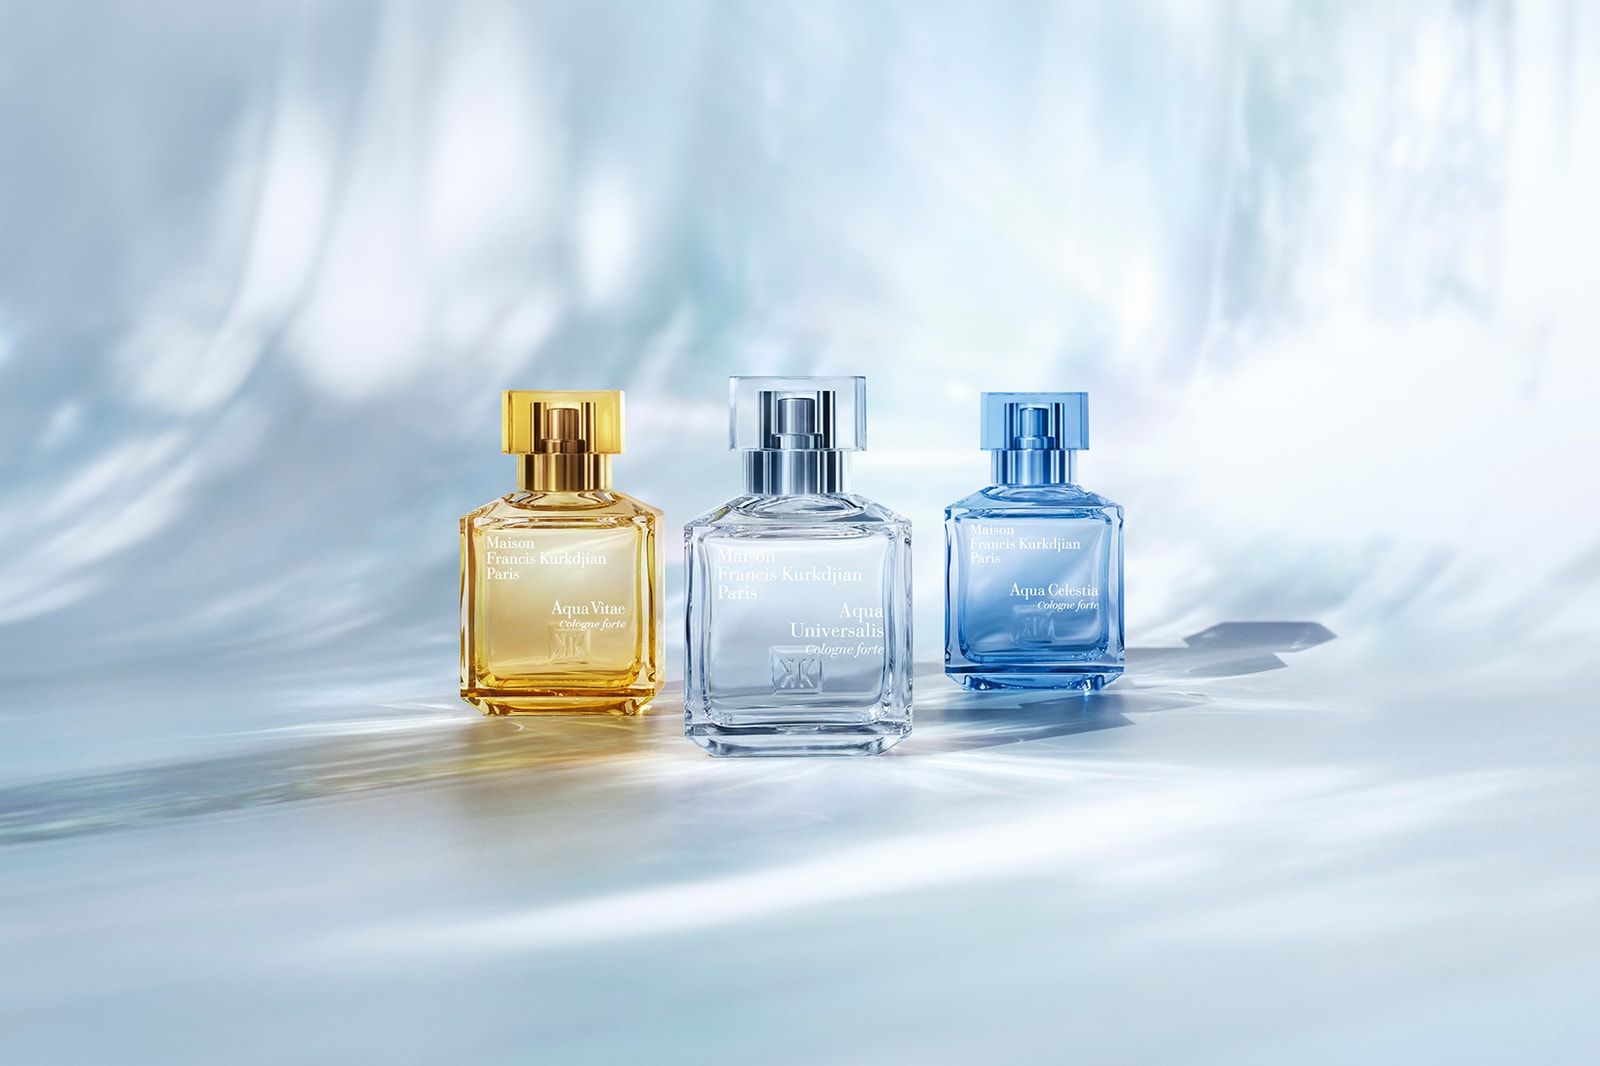 Maison Francis Kurkdjian Perfumer Parfum Christian Dior Creation Director Fragrances 